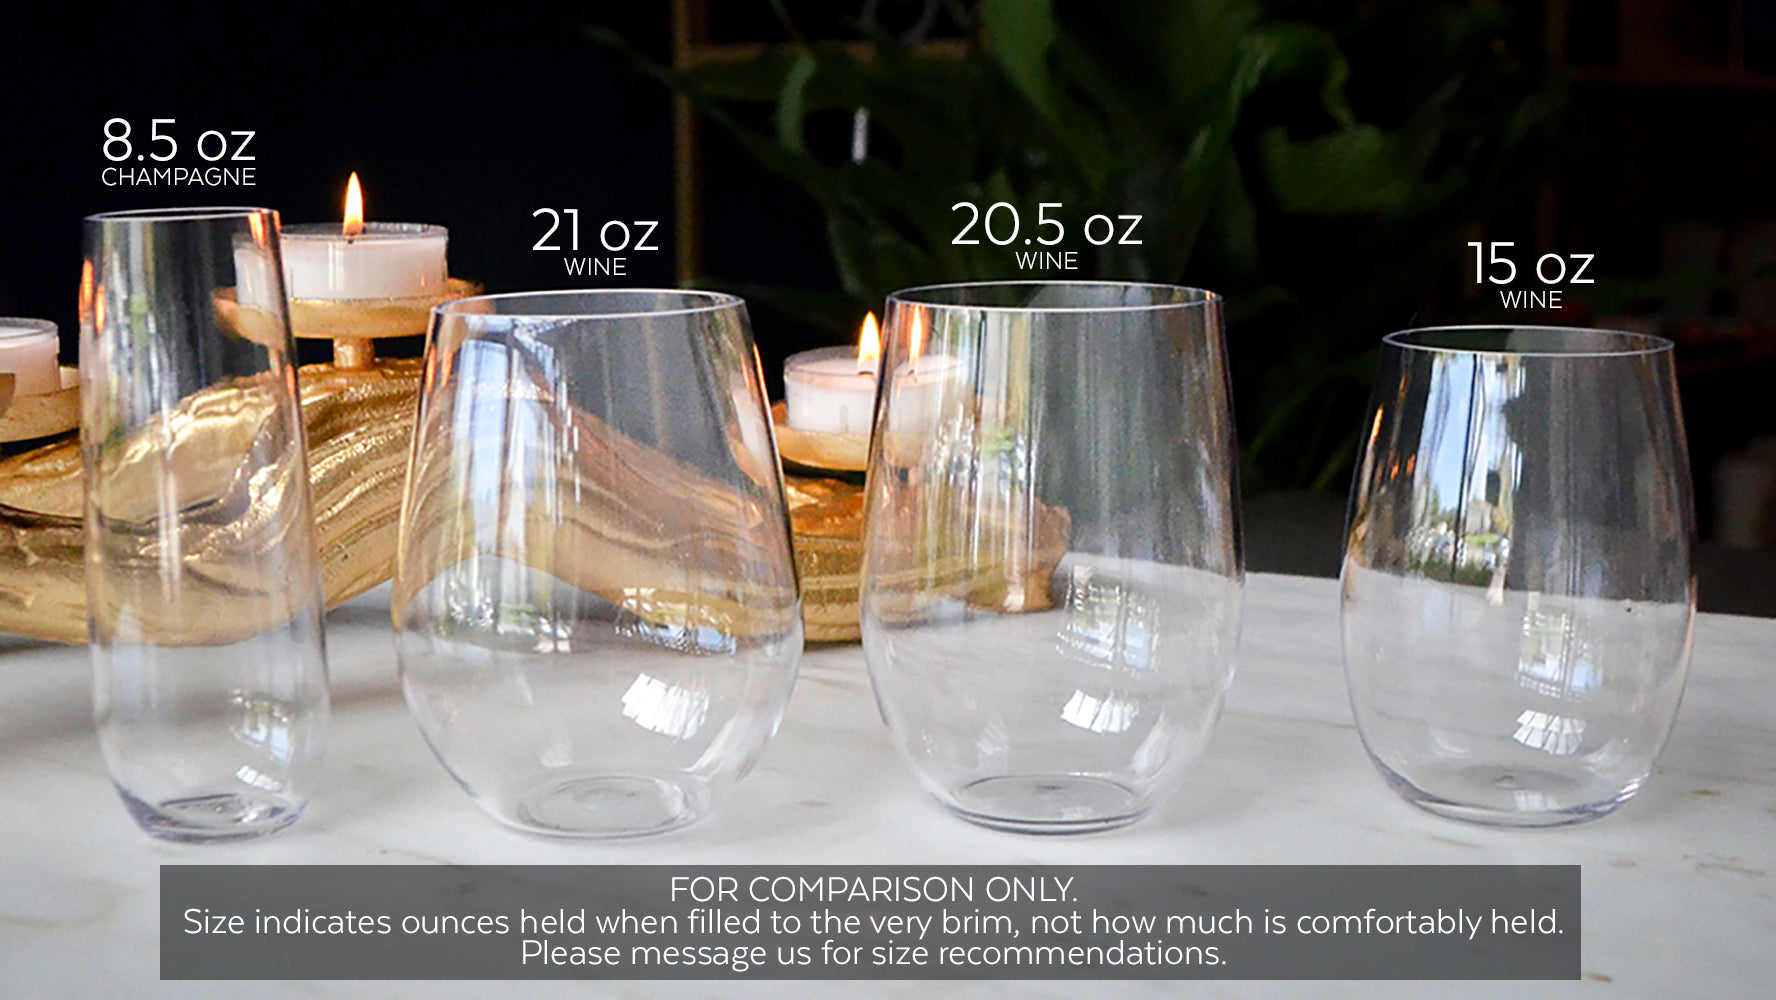 Perfect Stemless Wine Glass with Monogram - 21oz